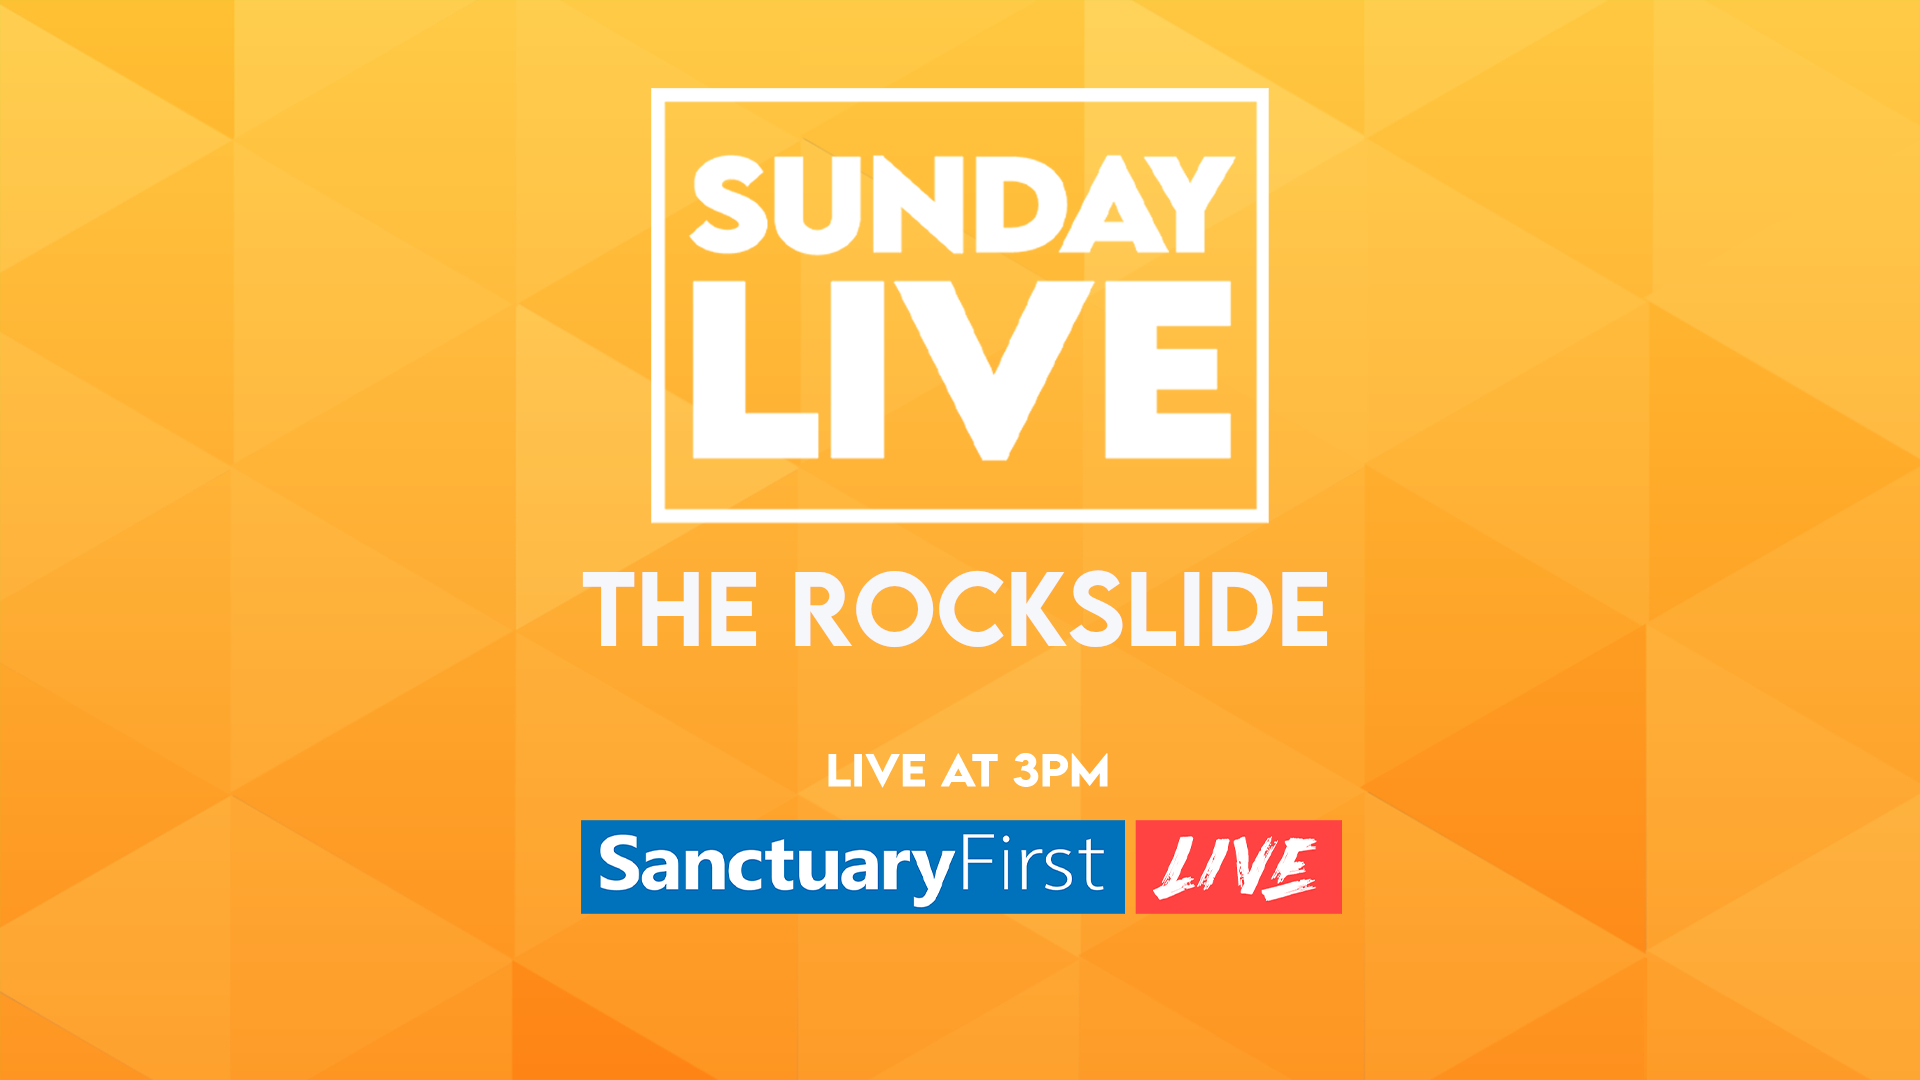 Sunday Live - The Rockslide